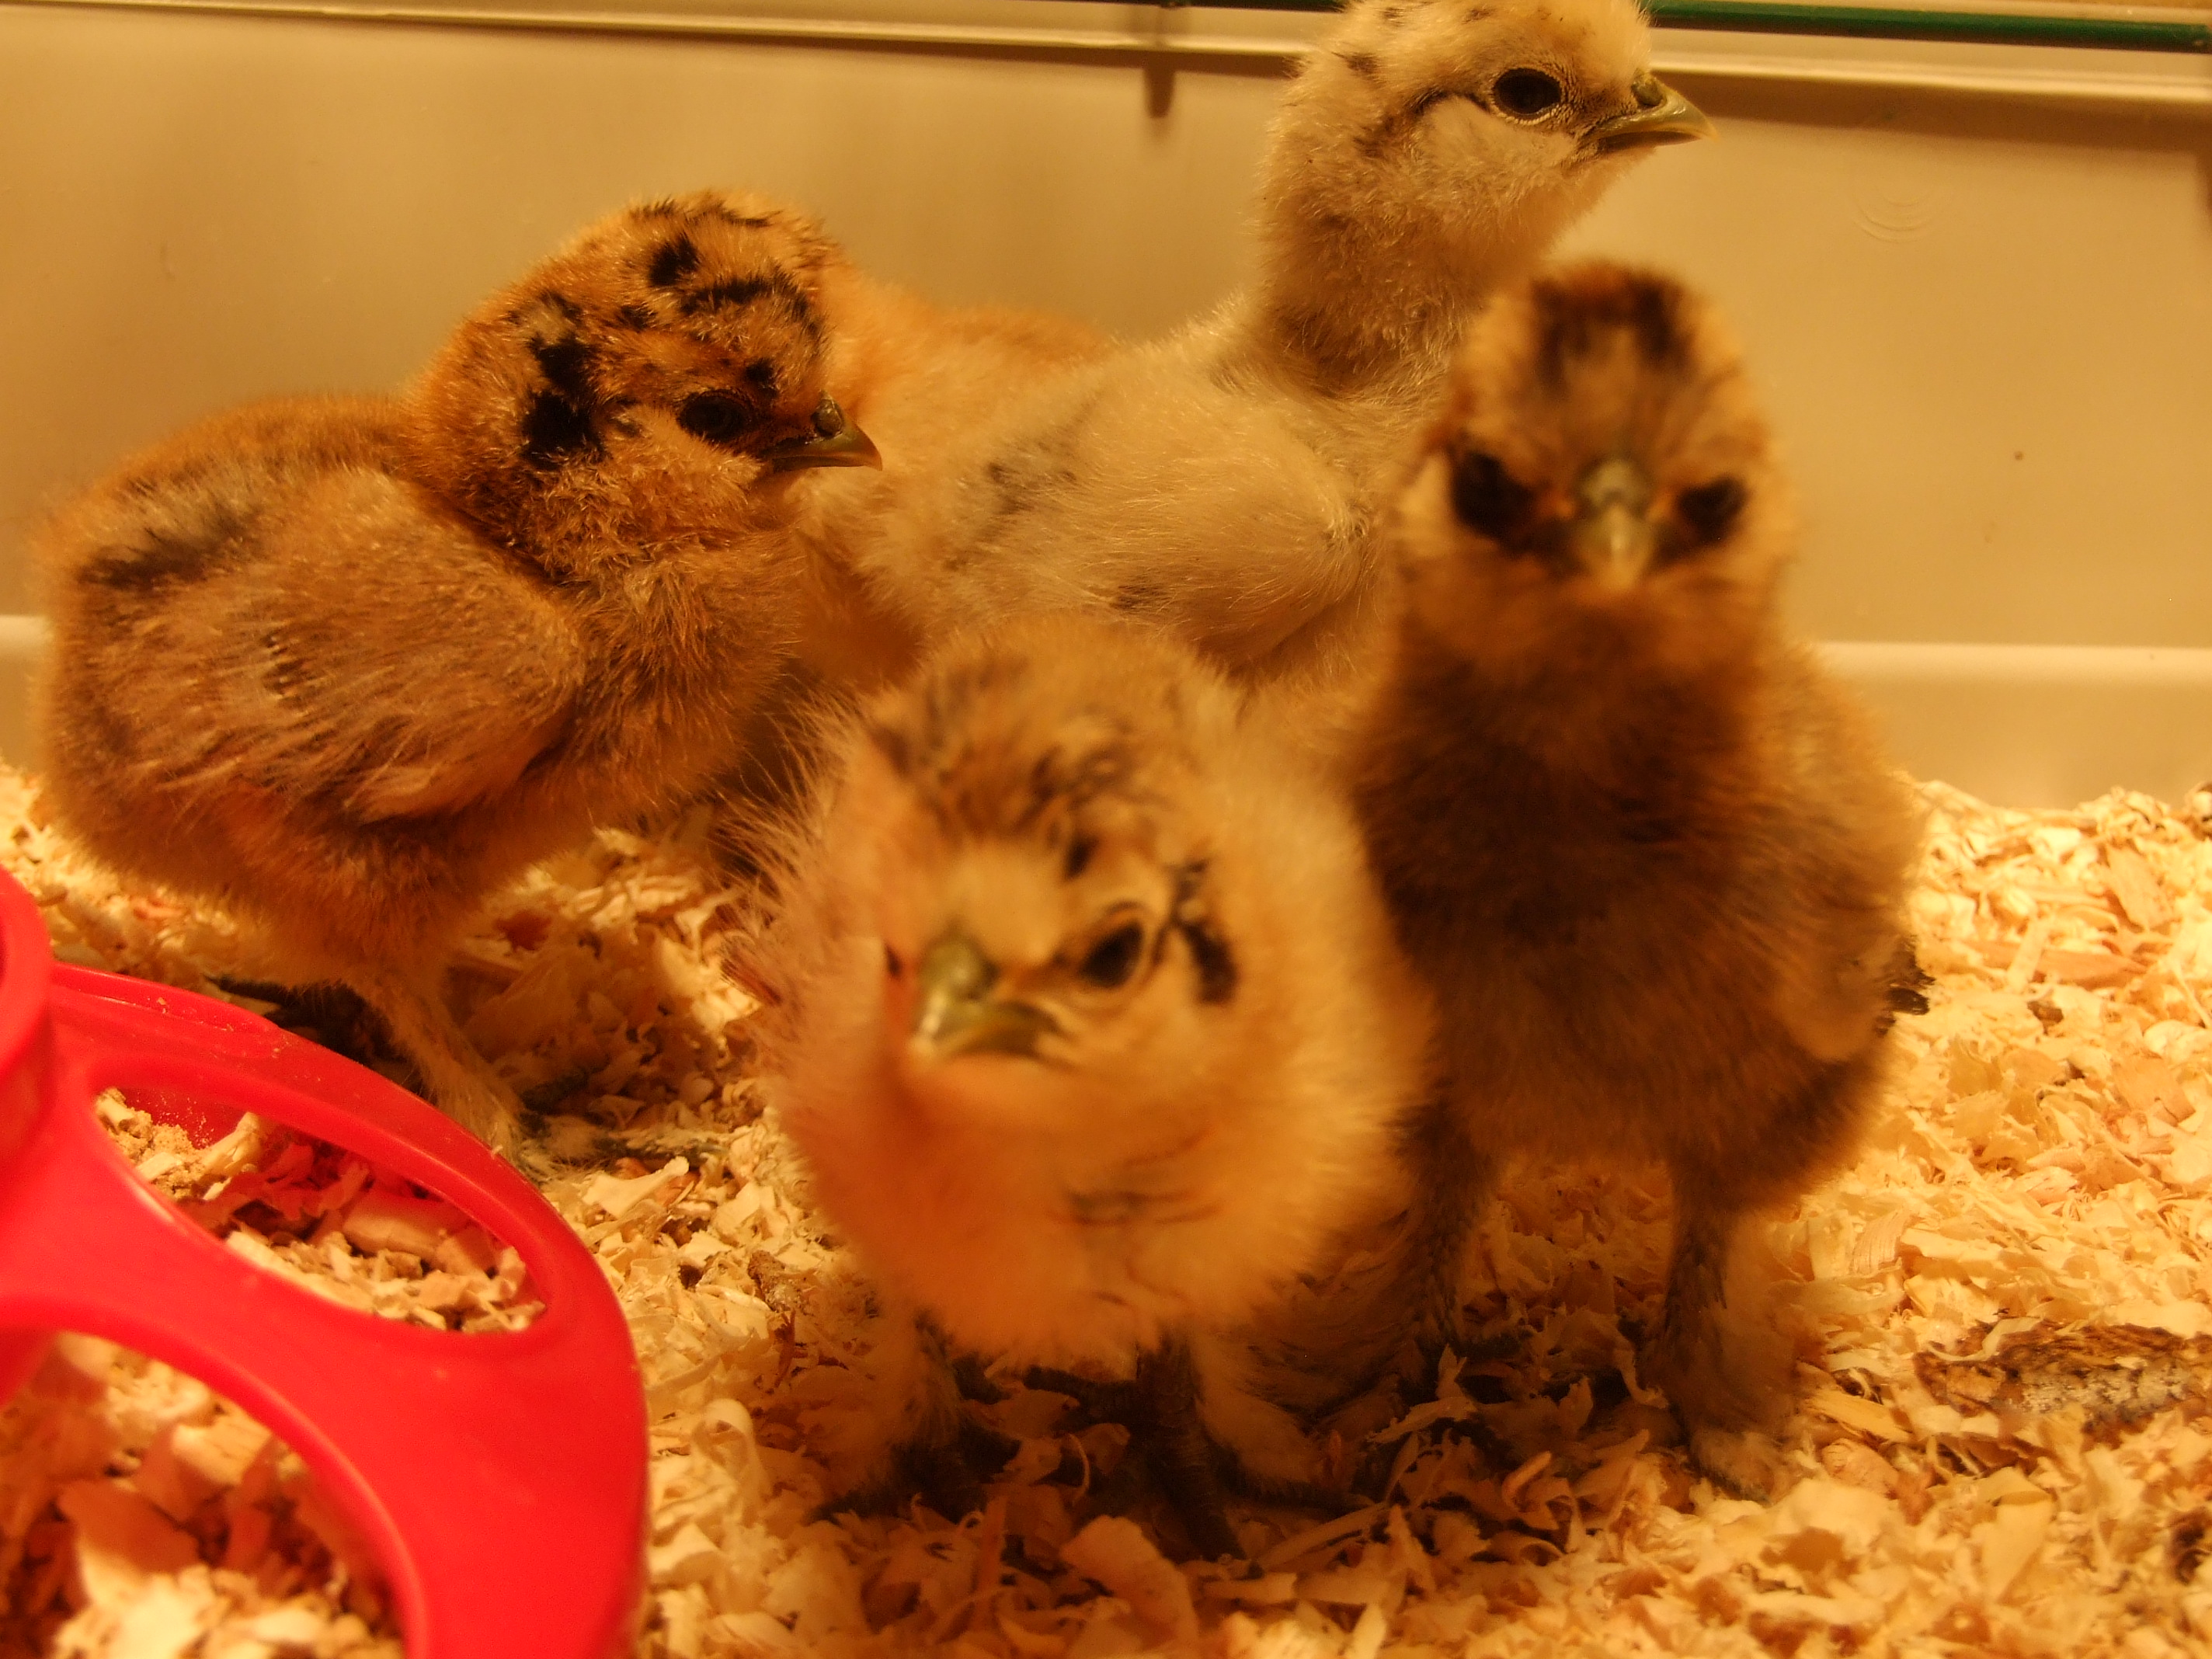 4 of my week old chicks